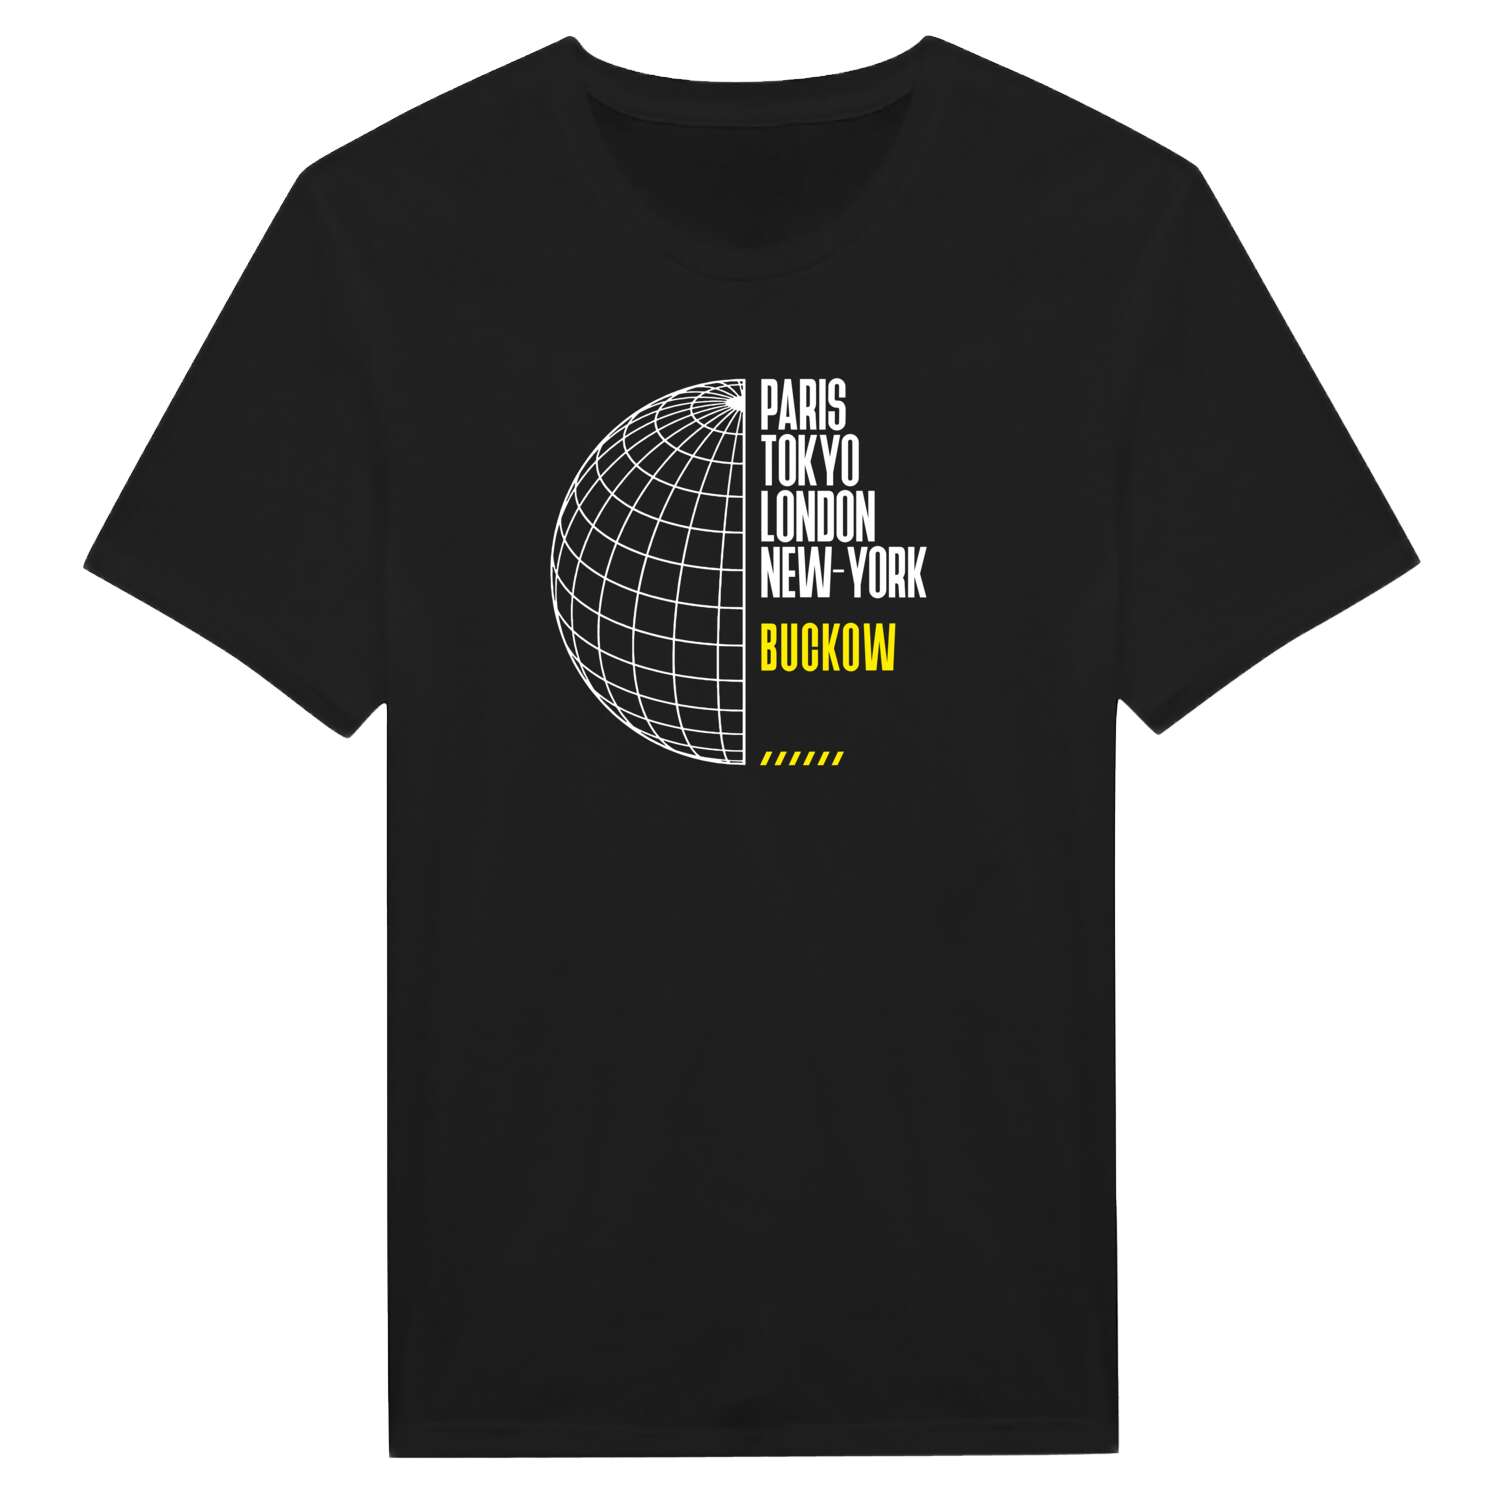 Buckow T-Shirt »Paris Tokyo London«